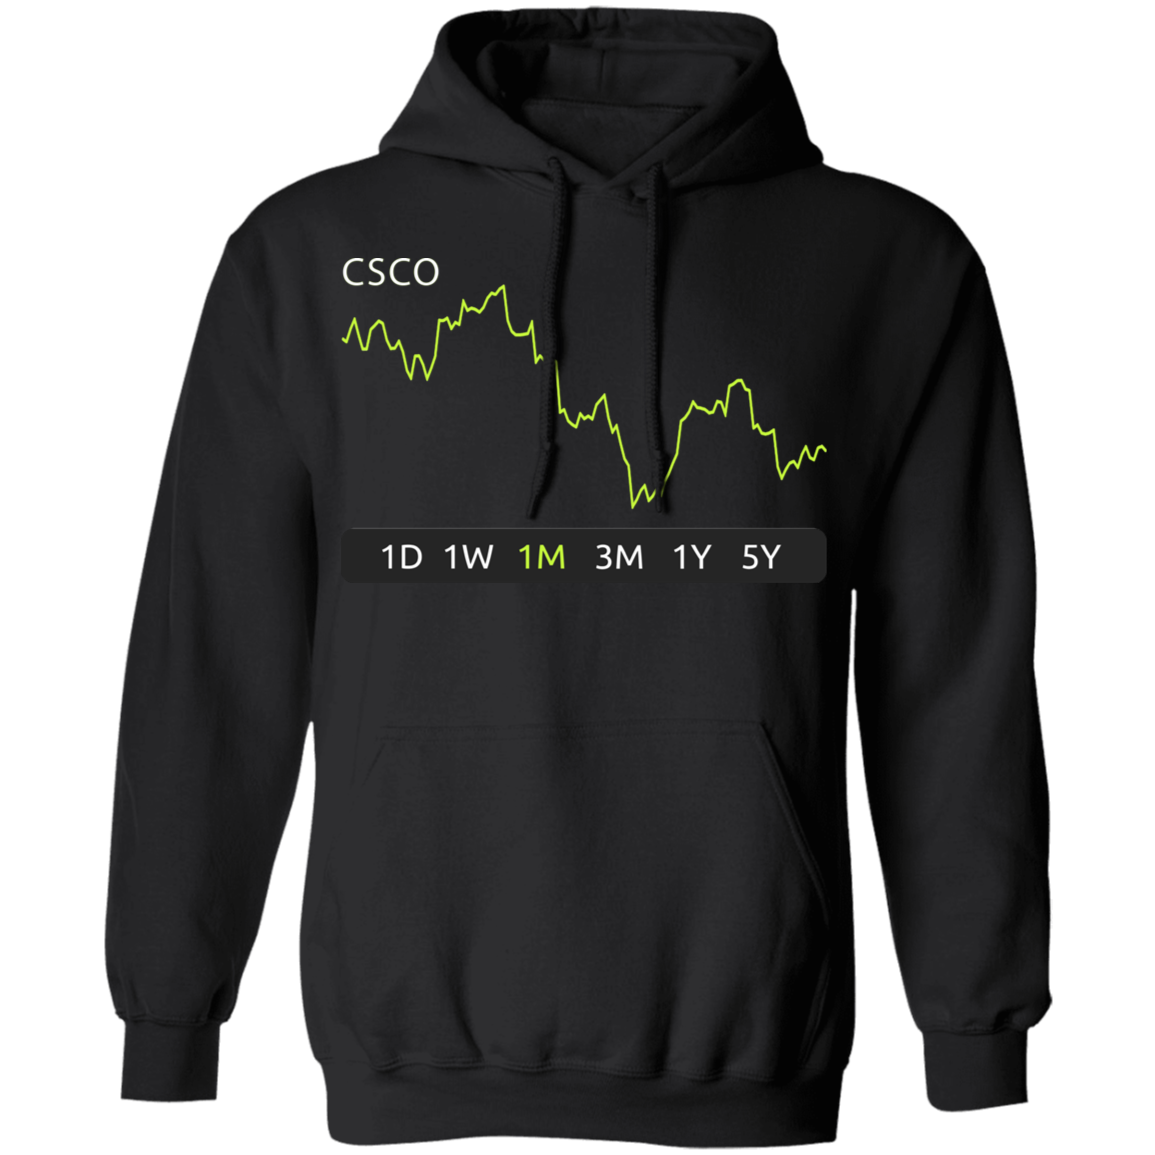 CSCO Stock 1m Pullover Hoodie